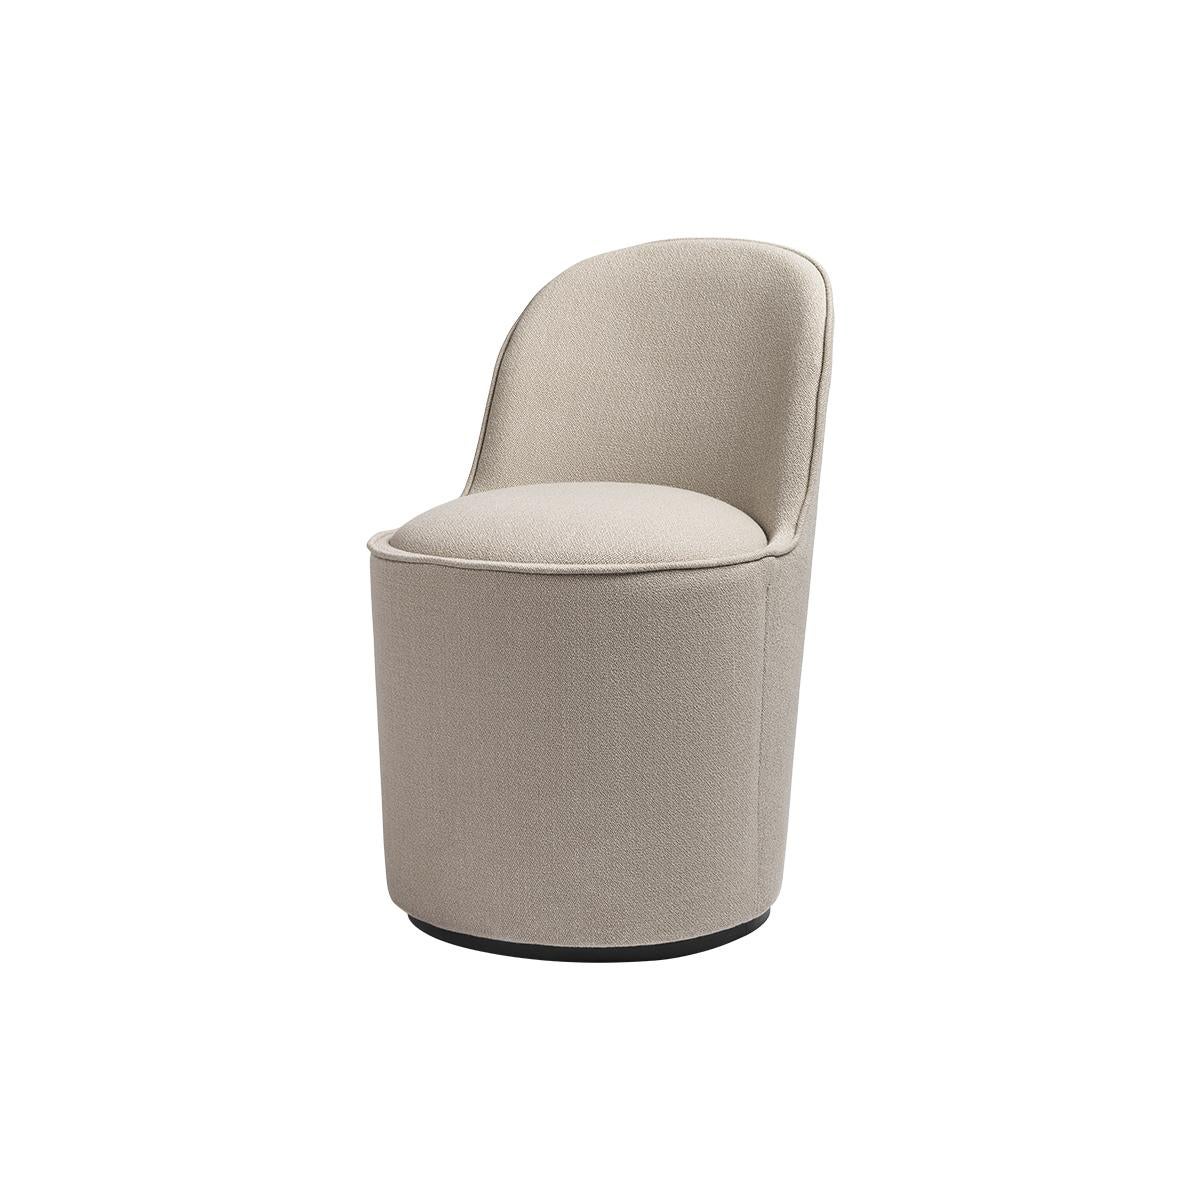 Brushed Tail Low Back Modern Italian Style Chauffeuse Lounge Chairs